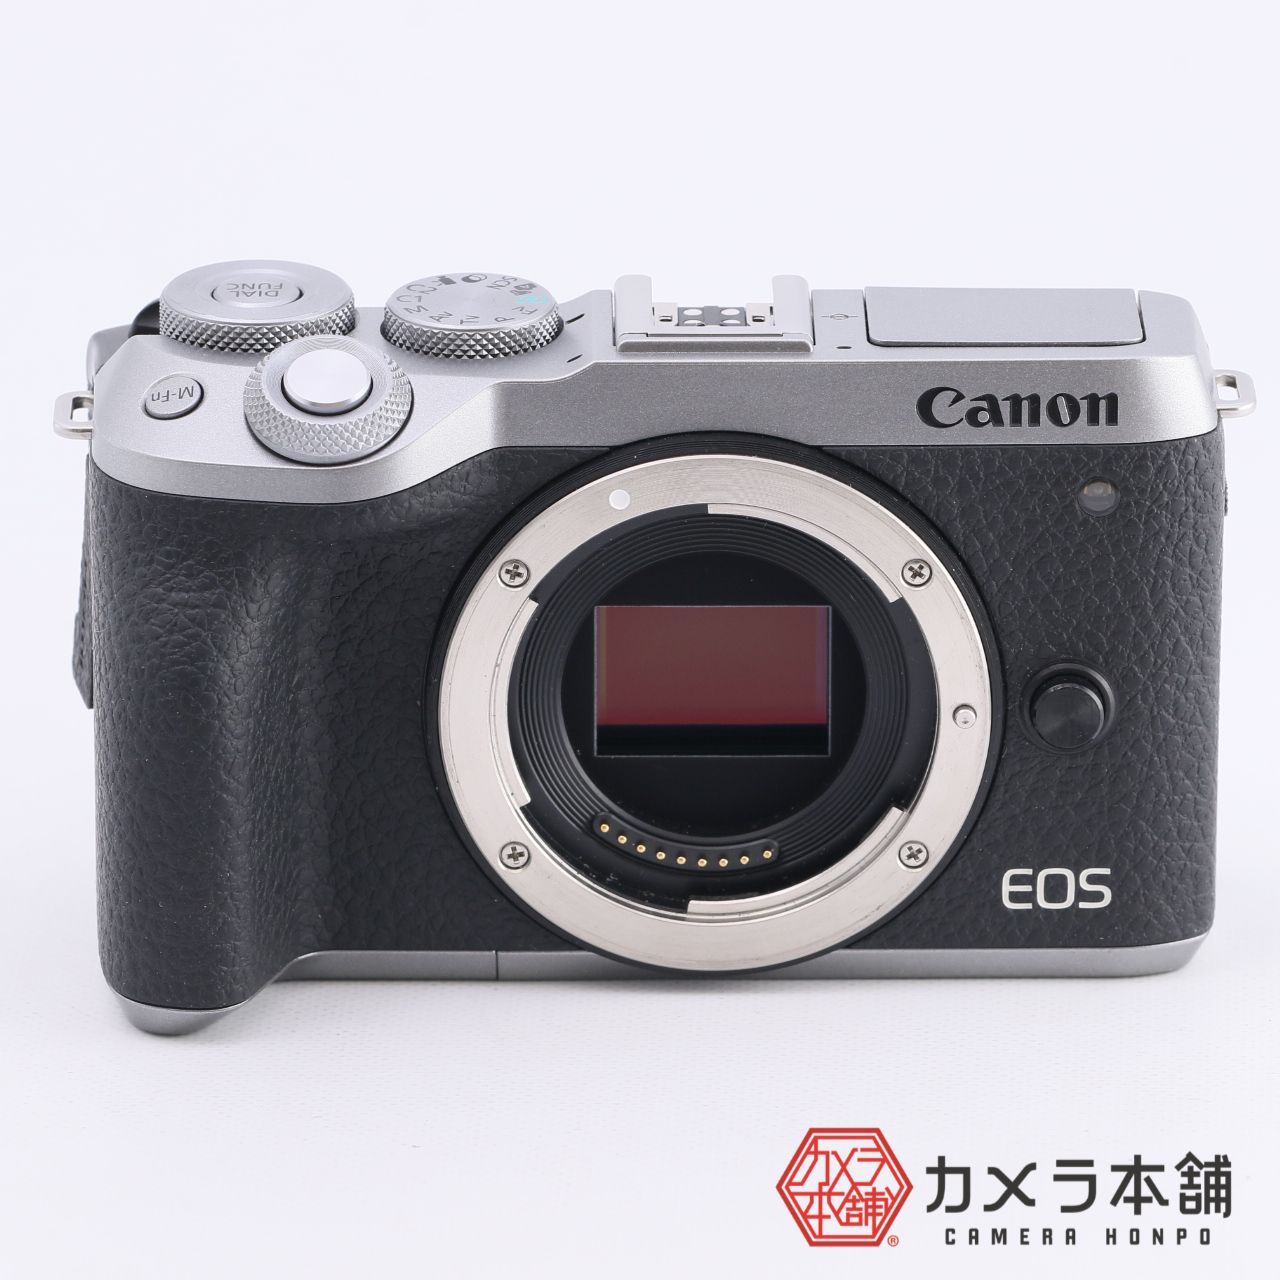 Canonミラーレス一眼 EOS M6 Mark II ボディ シルバー - カメラ本舗 ...